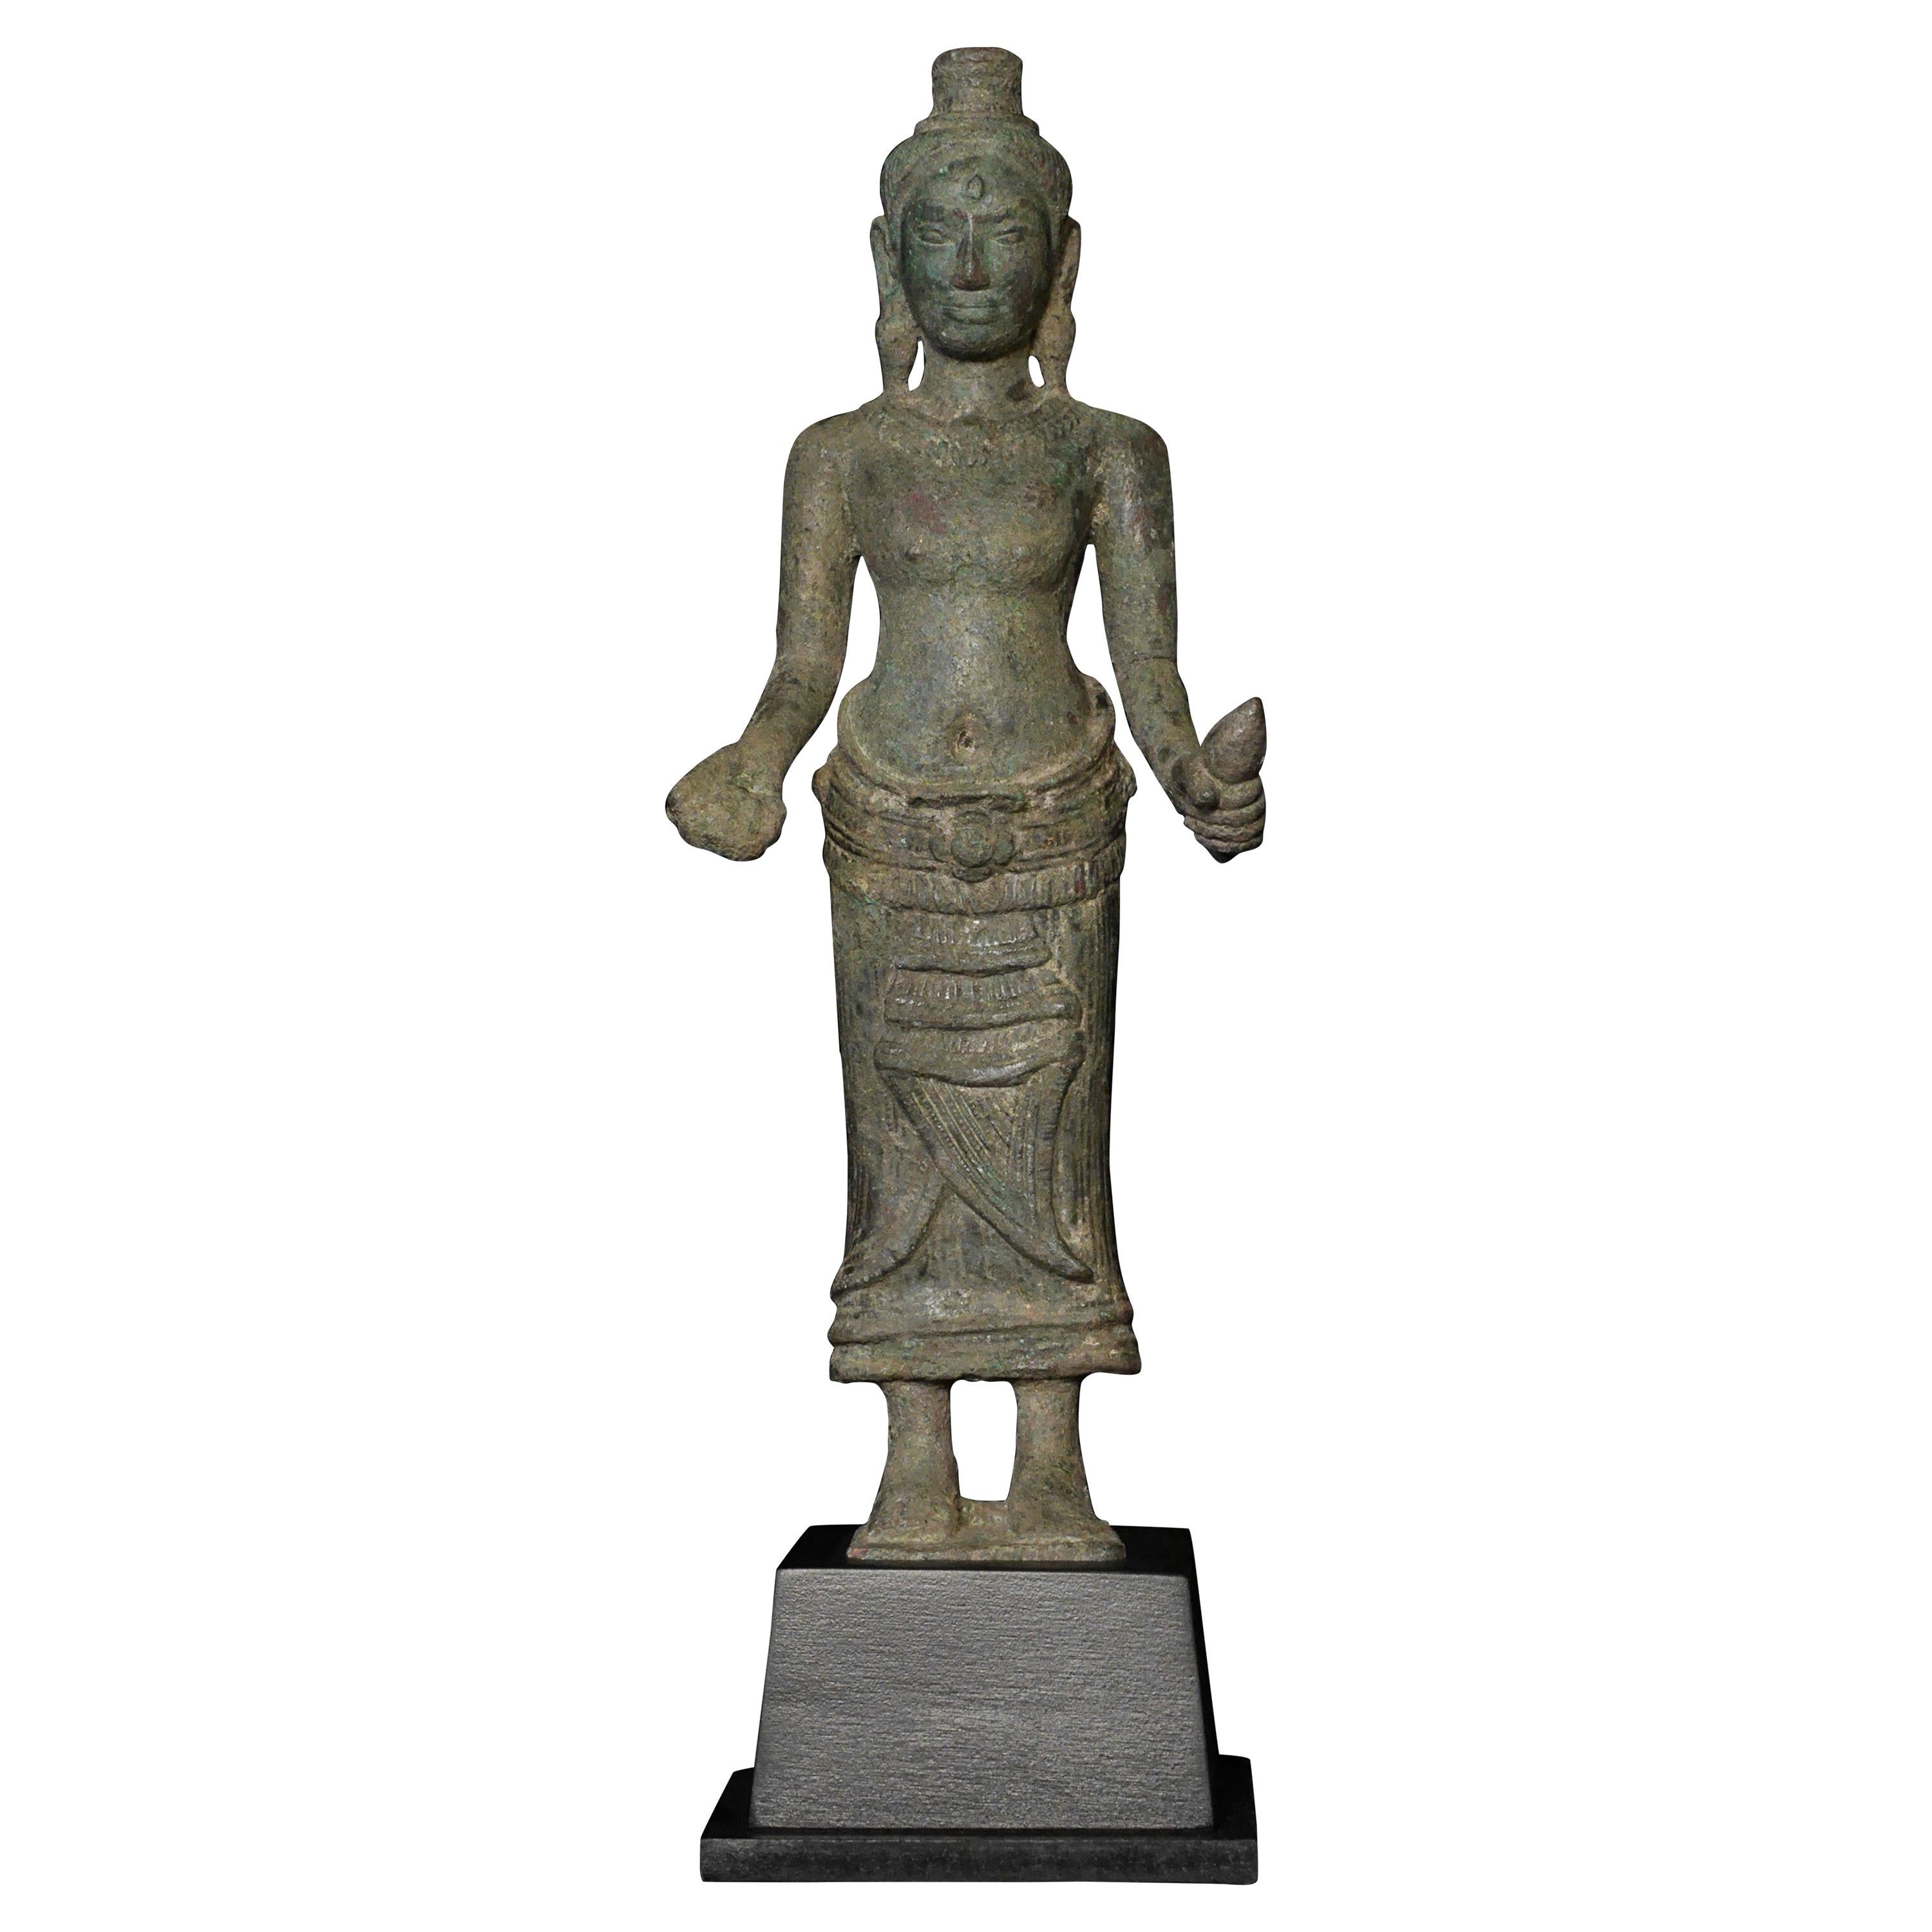 Very Fine 11-13thC Cambodian Uma Statue - 8323 For Sale